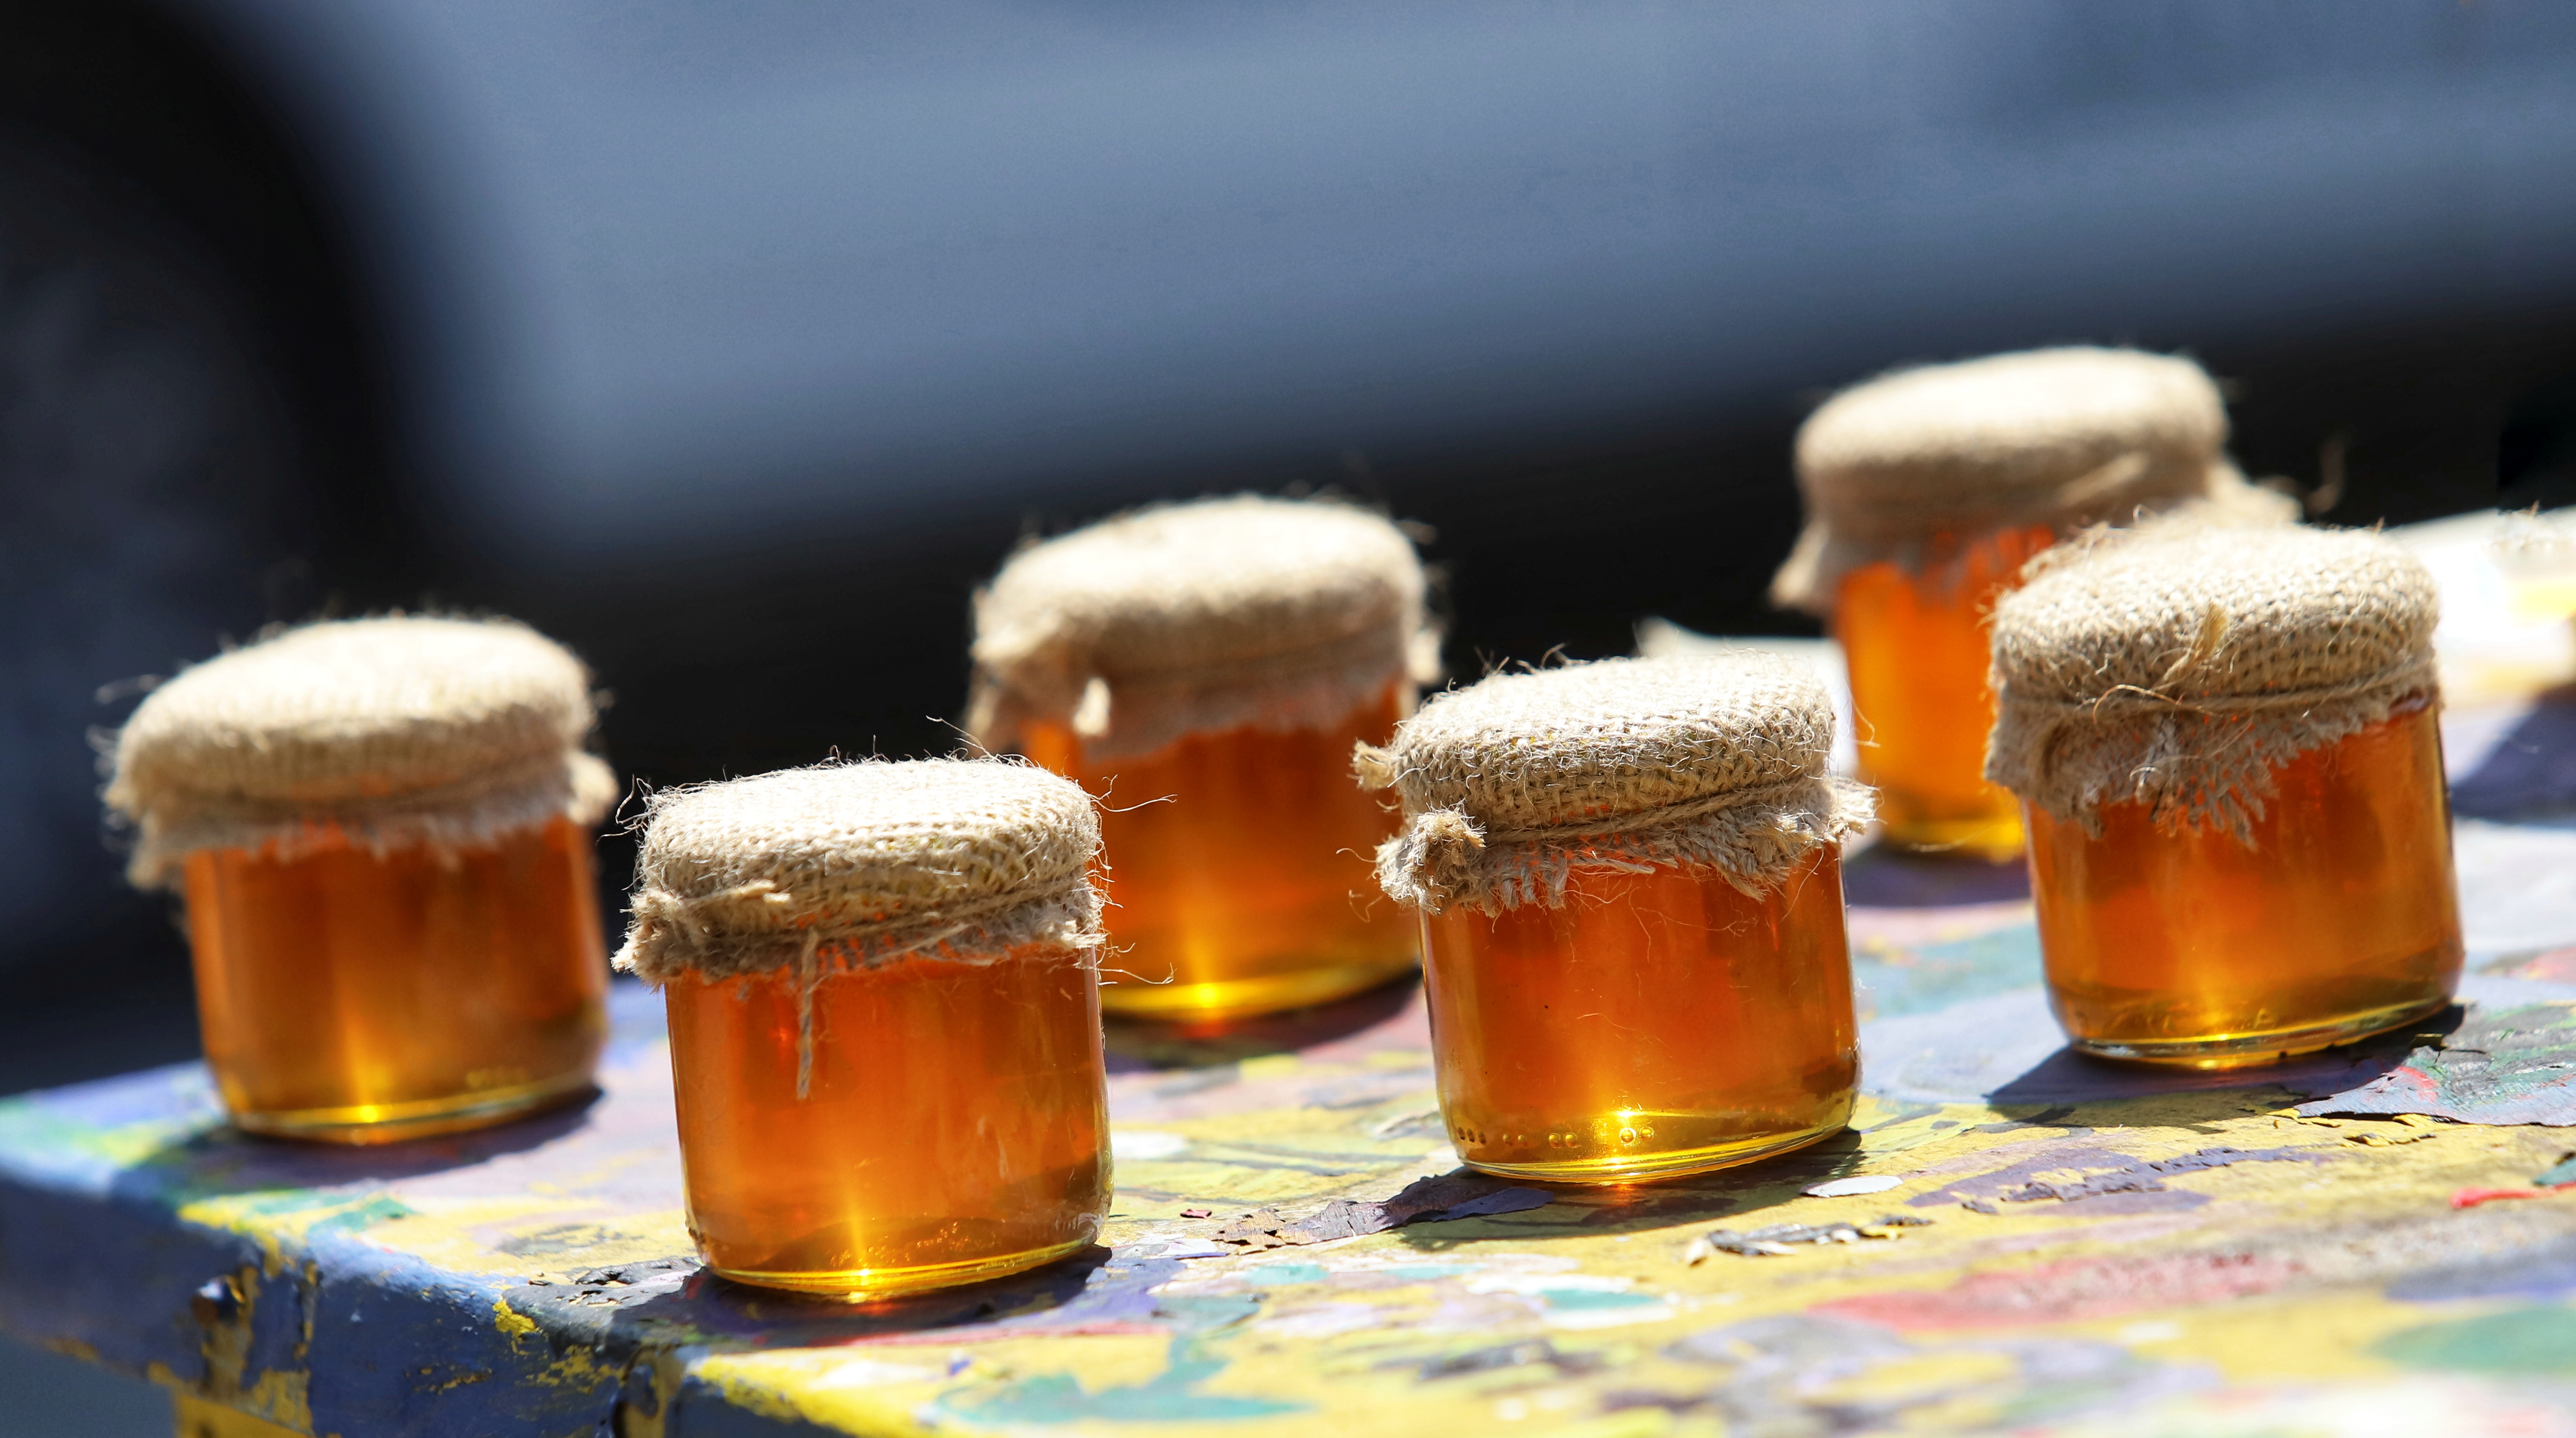 държавен фонд "земеделие", пчелари, помощ, мед